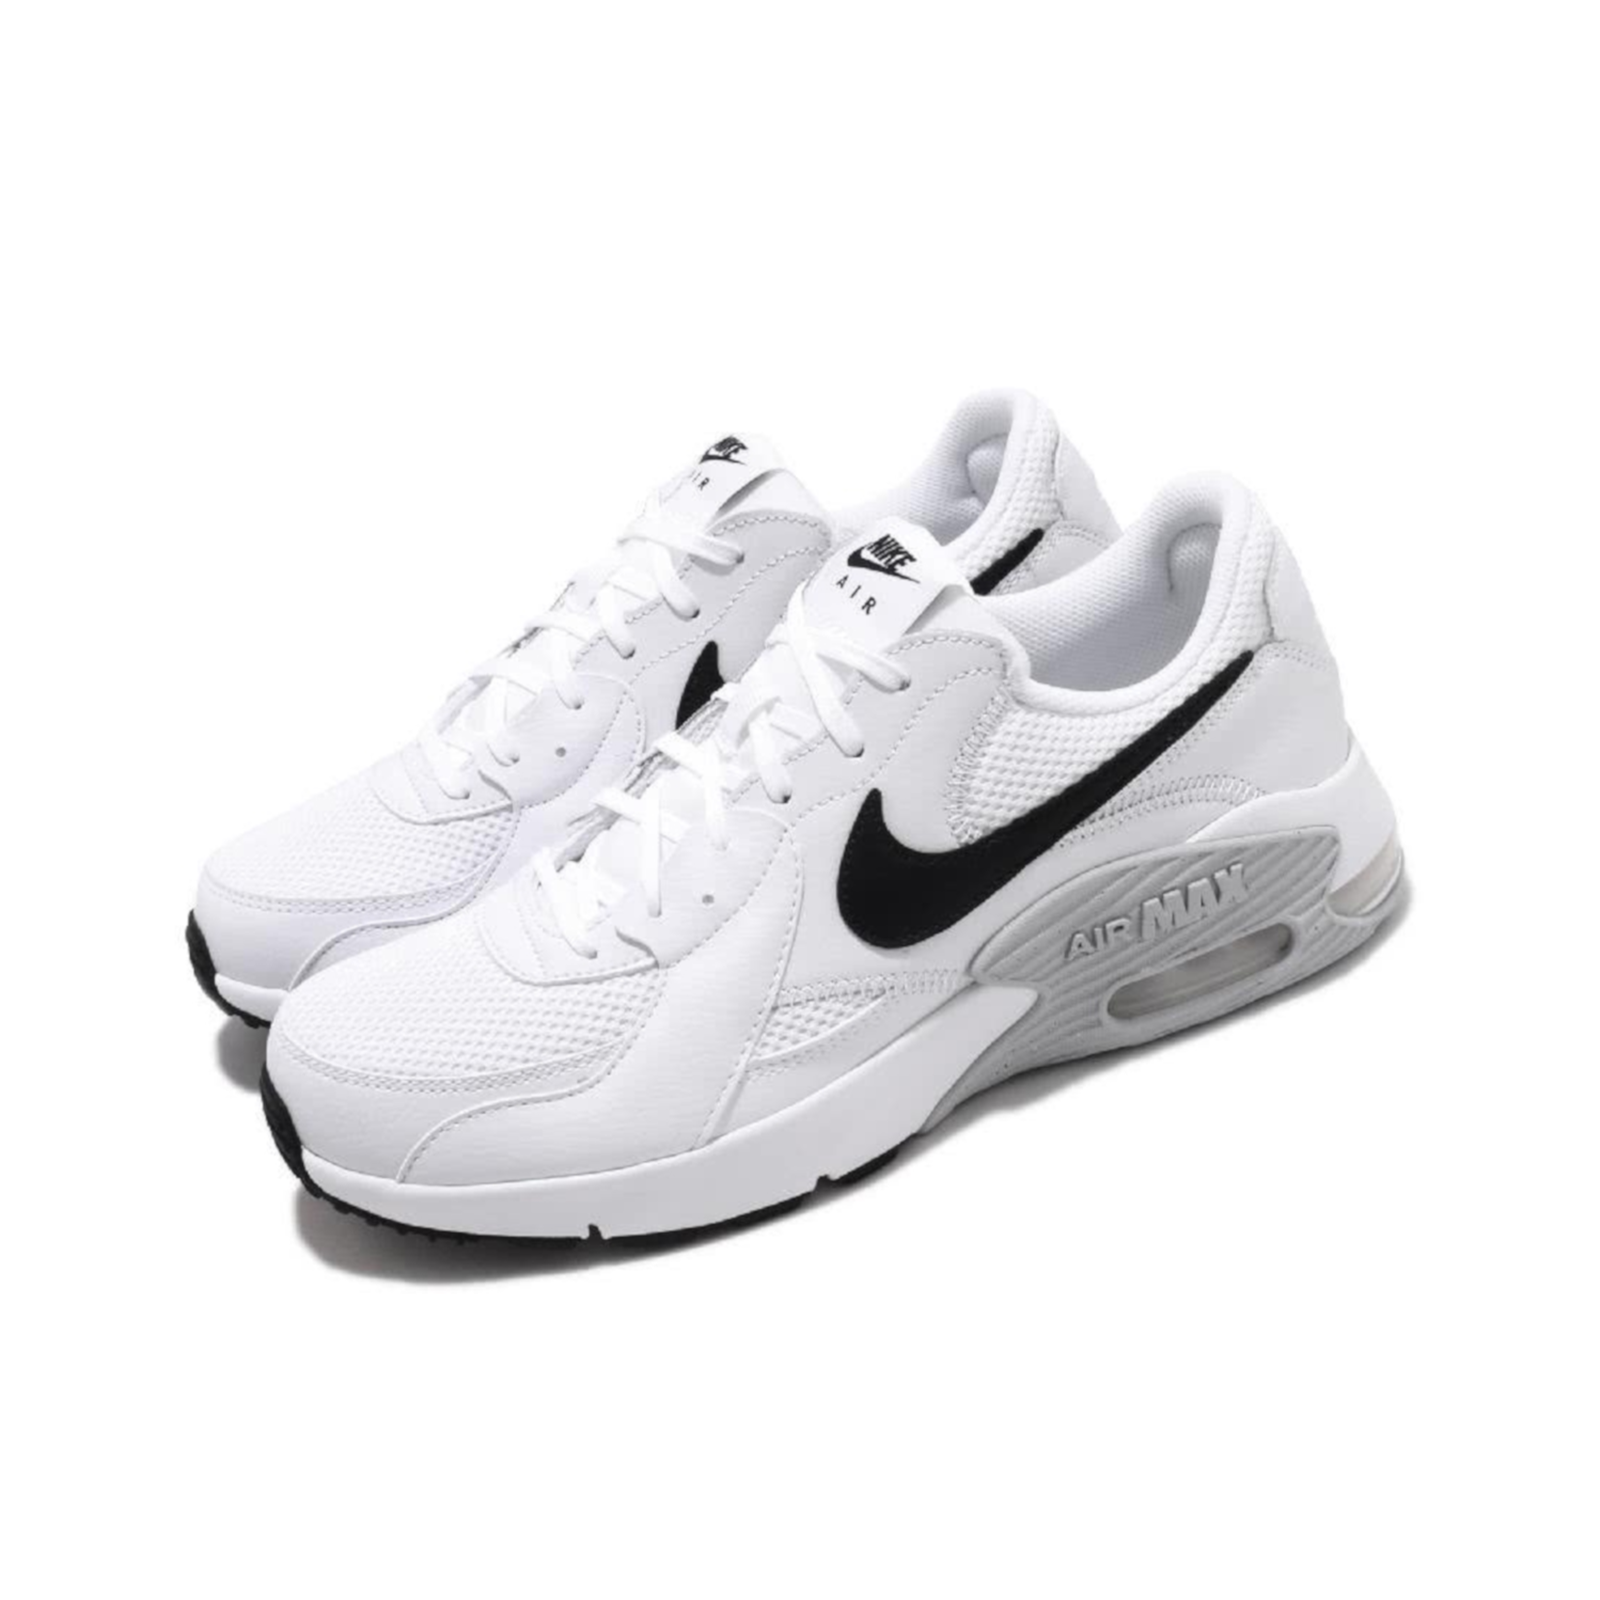 Scarpette Nike air max Excee CD4165100 colore bianco listino € 115,00 | eBay